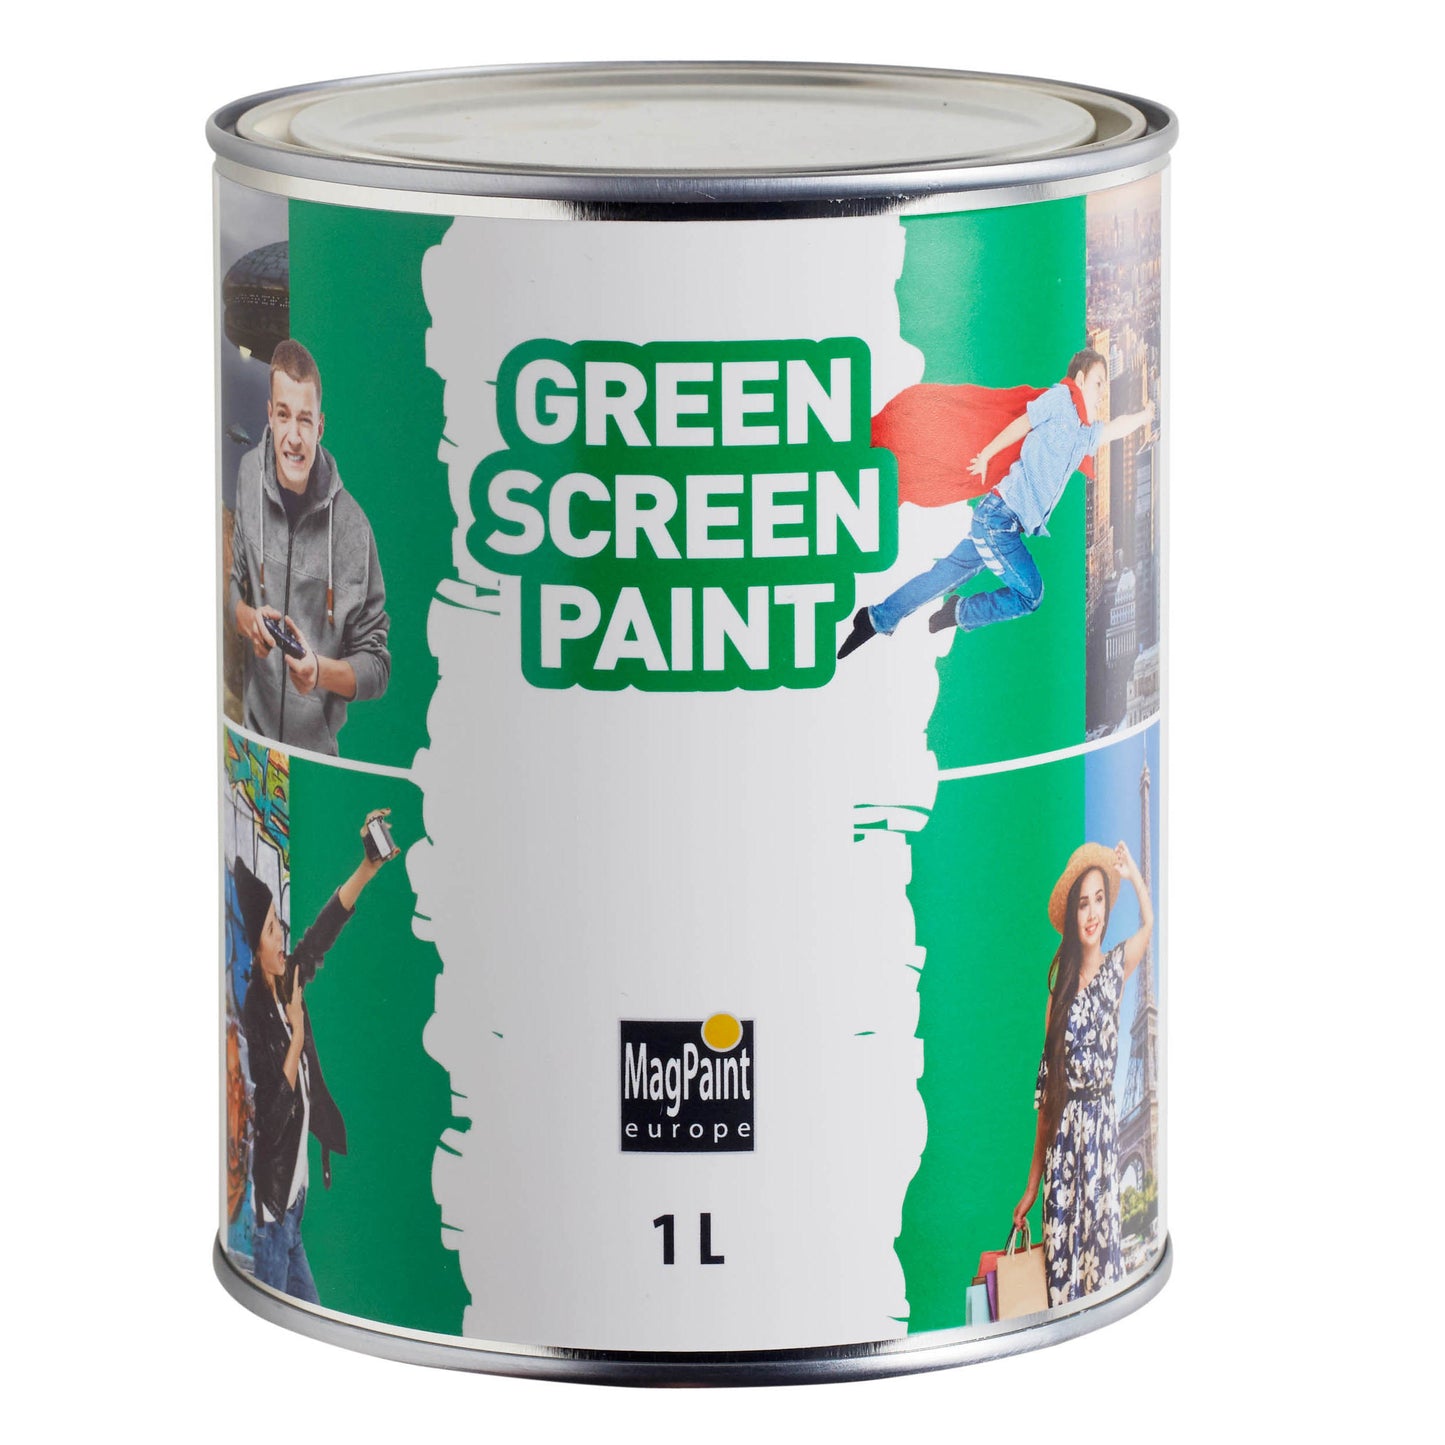 Greenscreen Paint